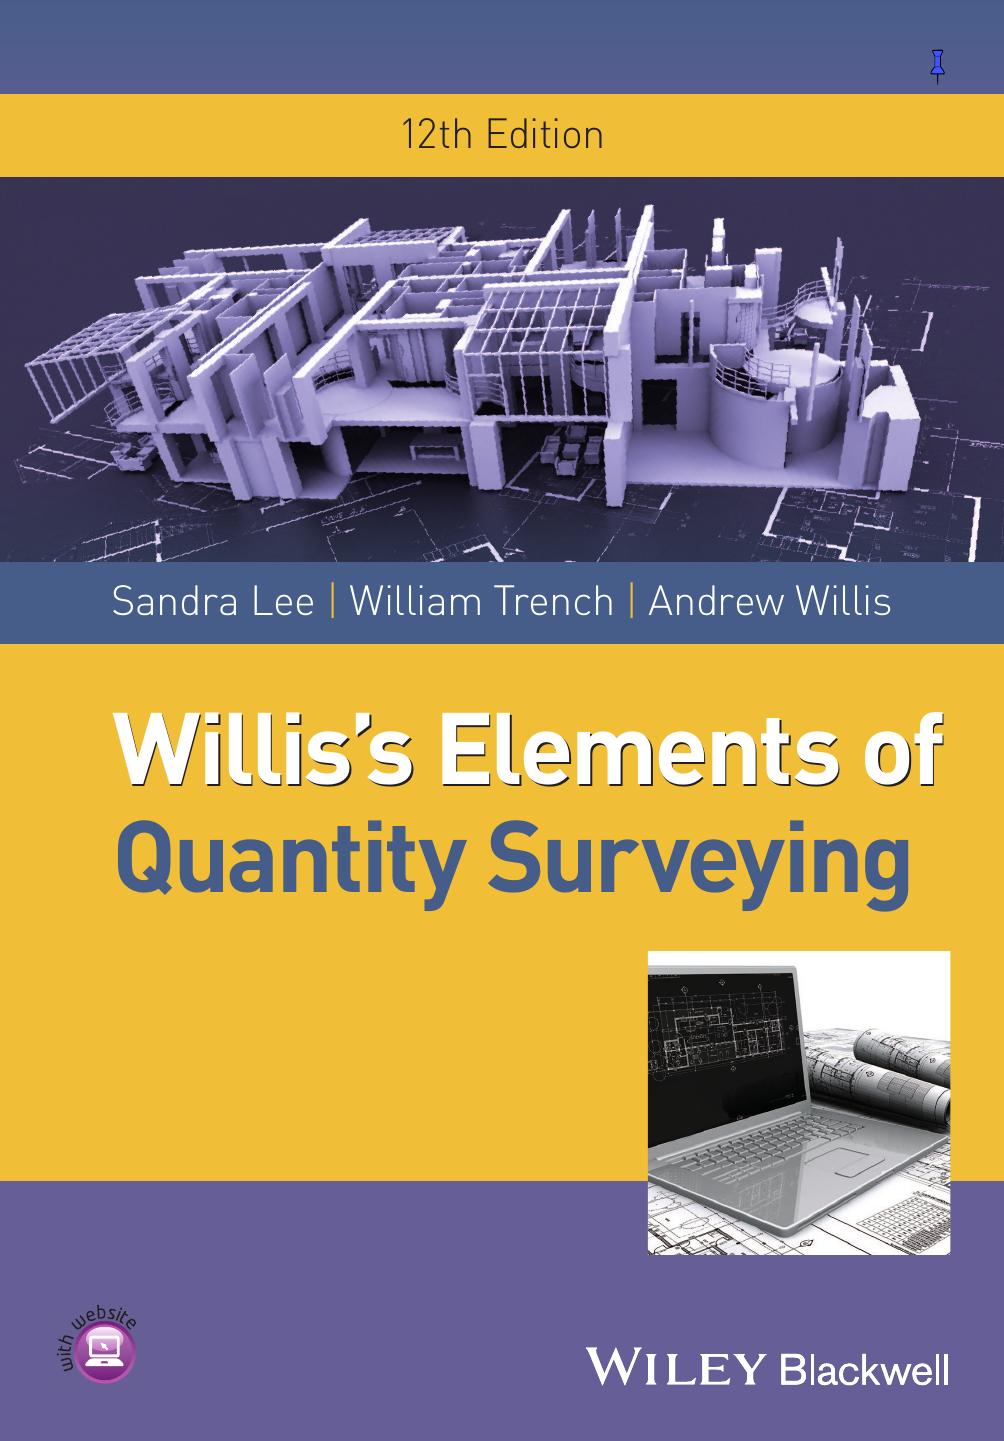 Willis’s Elements of Quantity Surveying